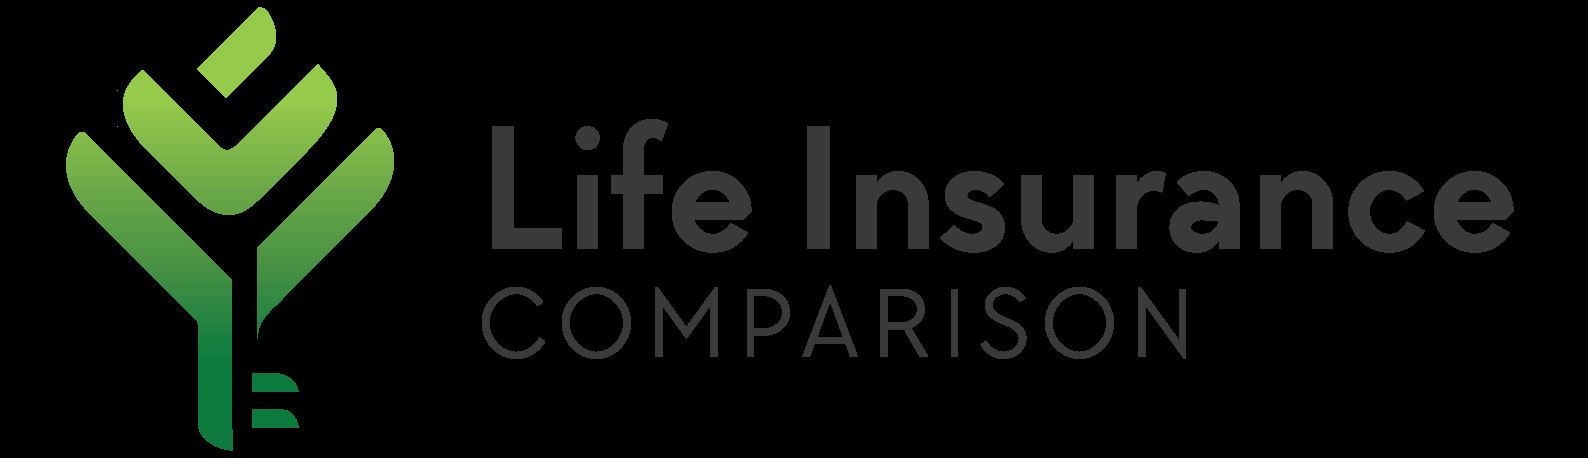 Compare Life Insurance Quotes
 Life Insurance parison